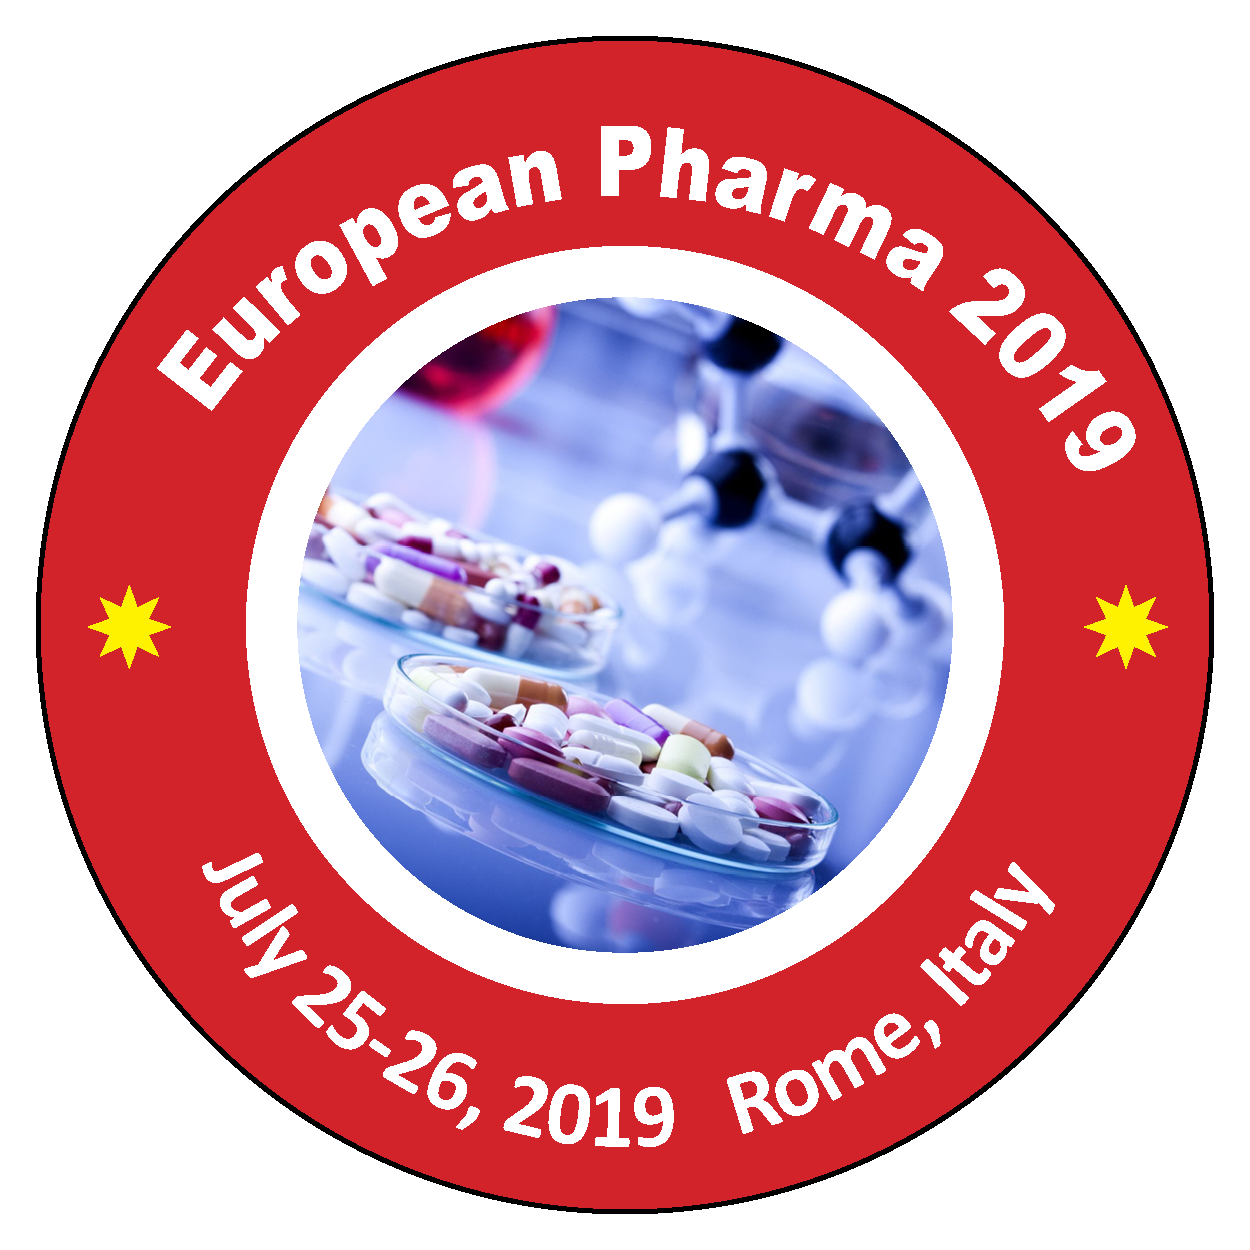 3rd European Congress on Pharma and Pharmaceutical Science